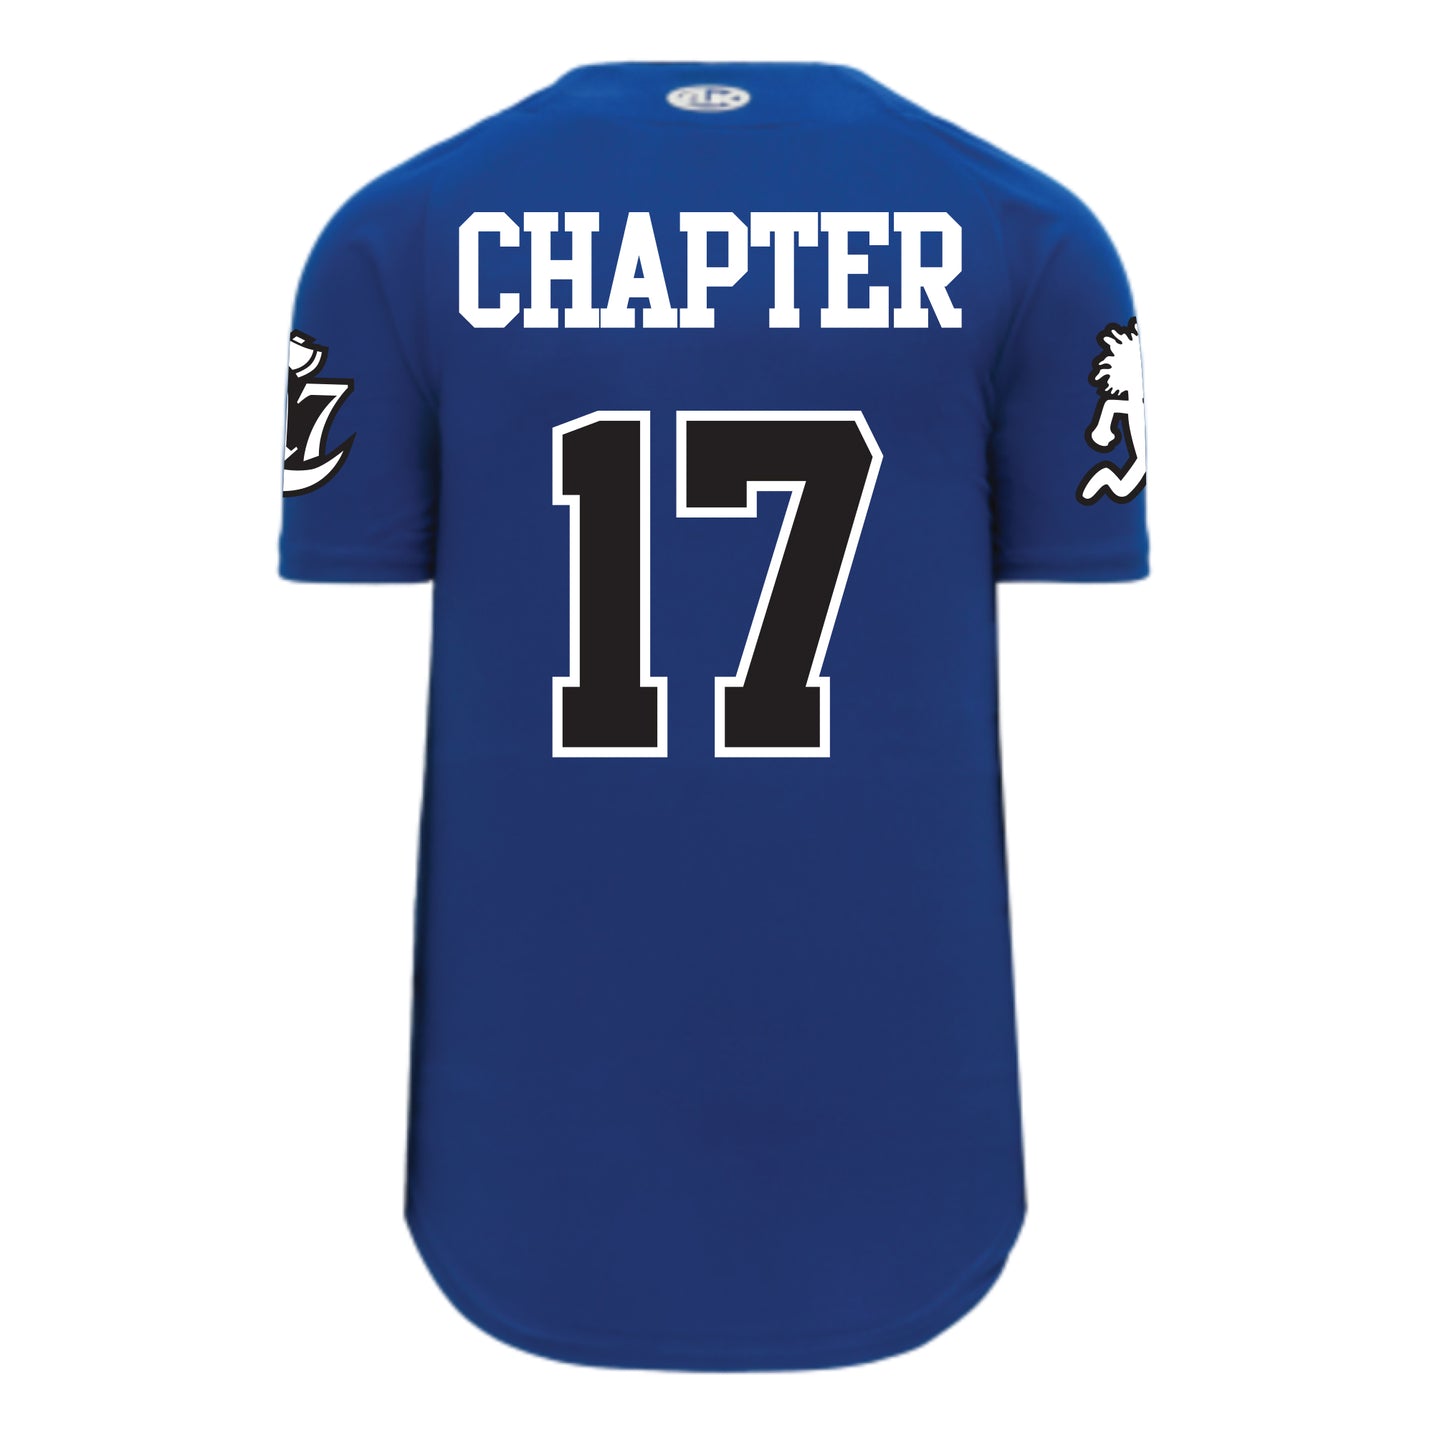 Chapter 17 Baseball button up jersey